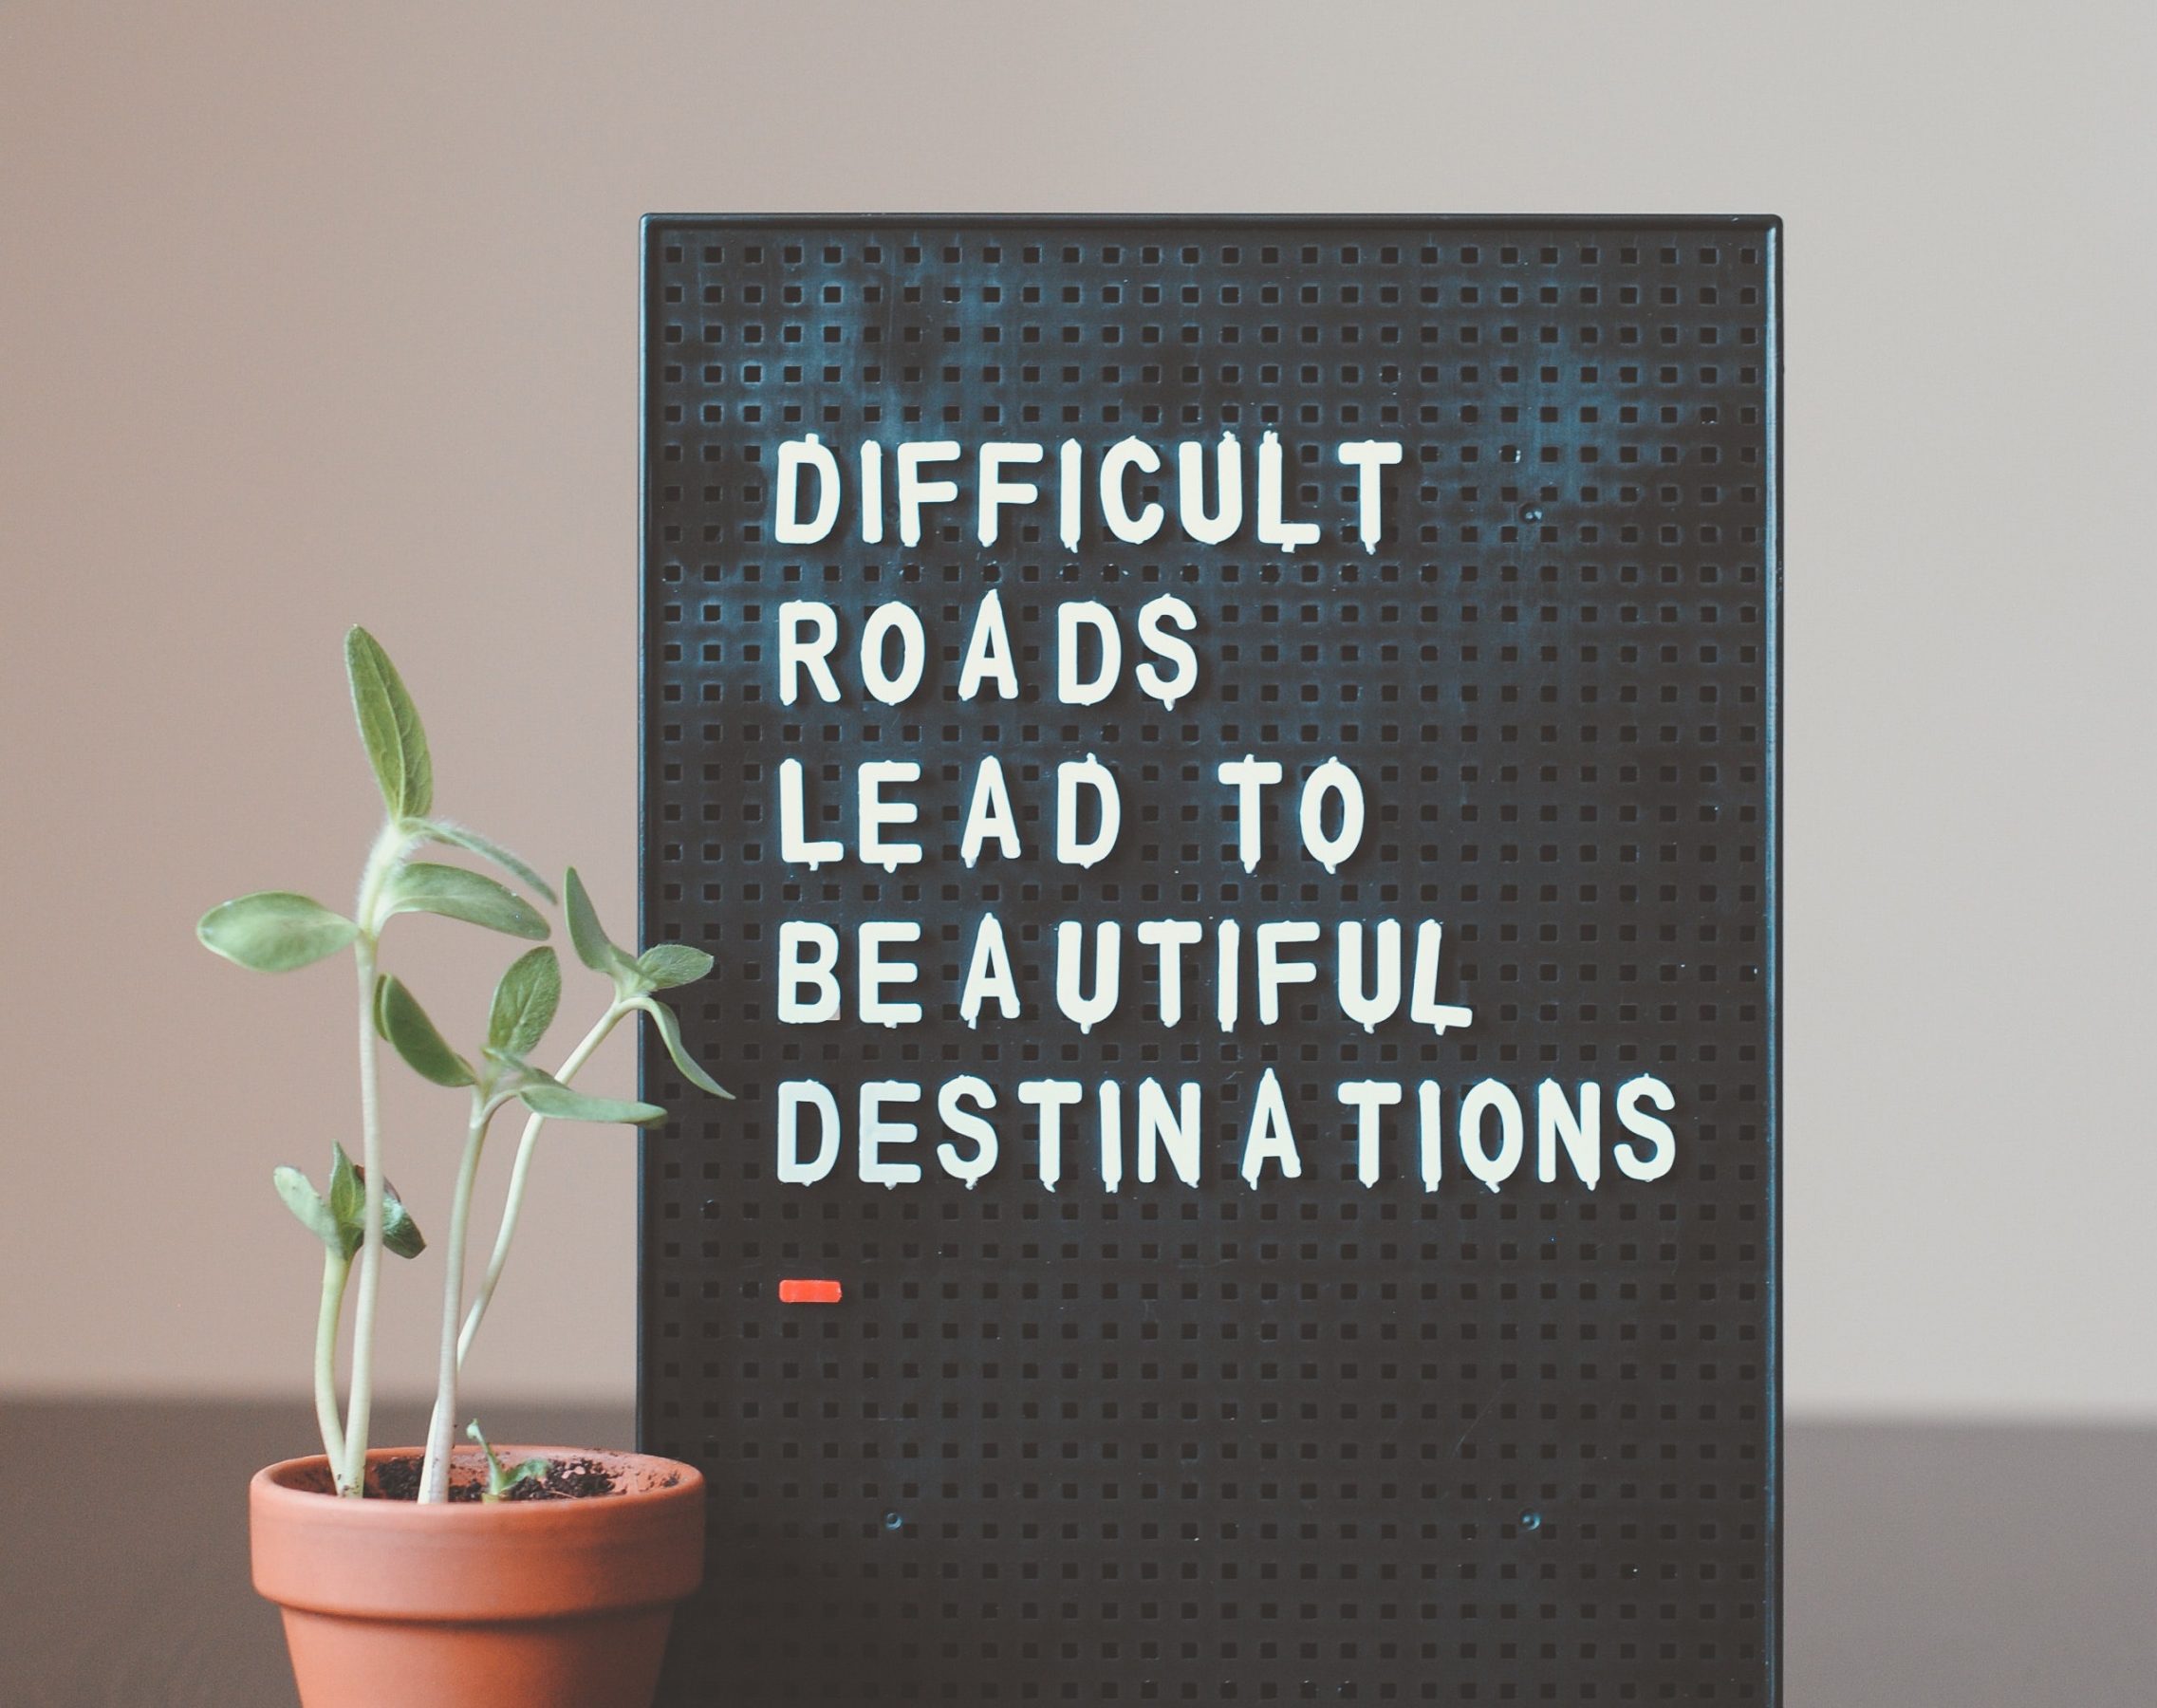 Mood board: Difficult roads lead to beautiful destinations